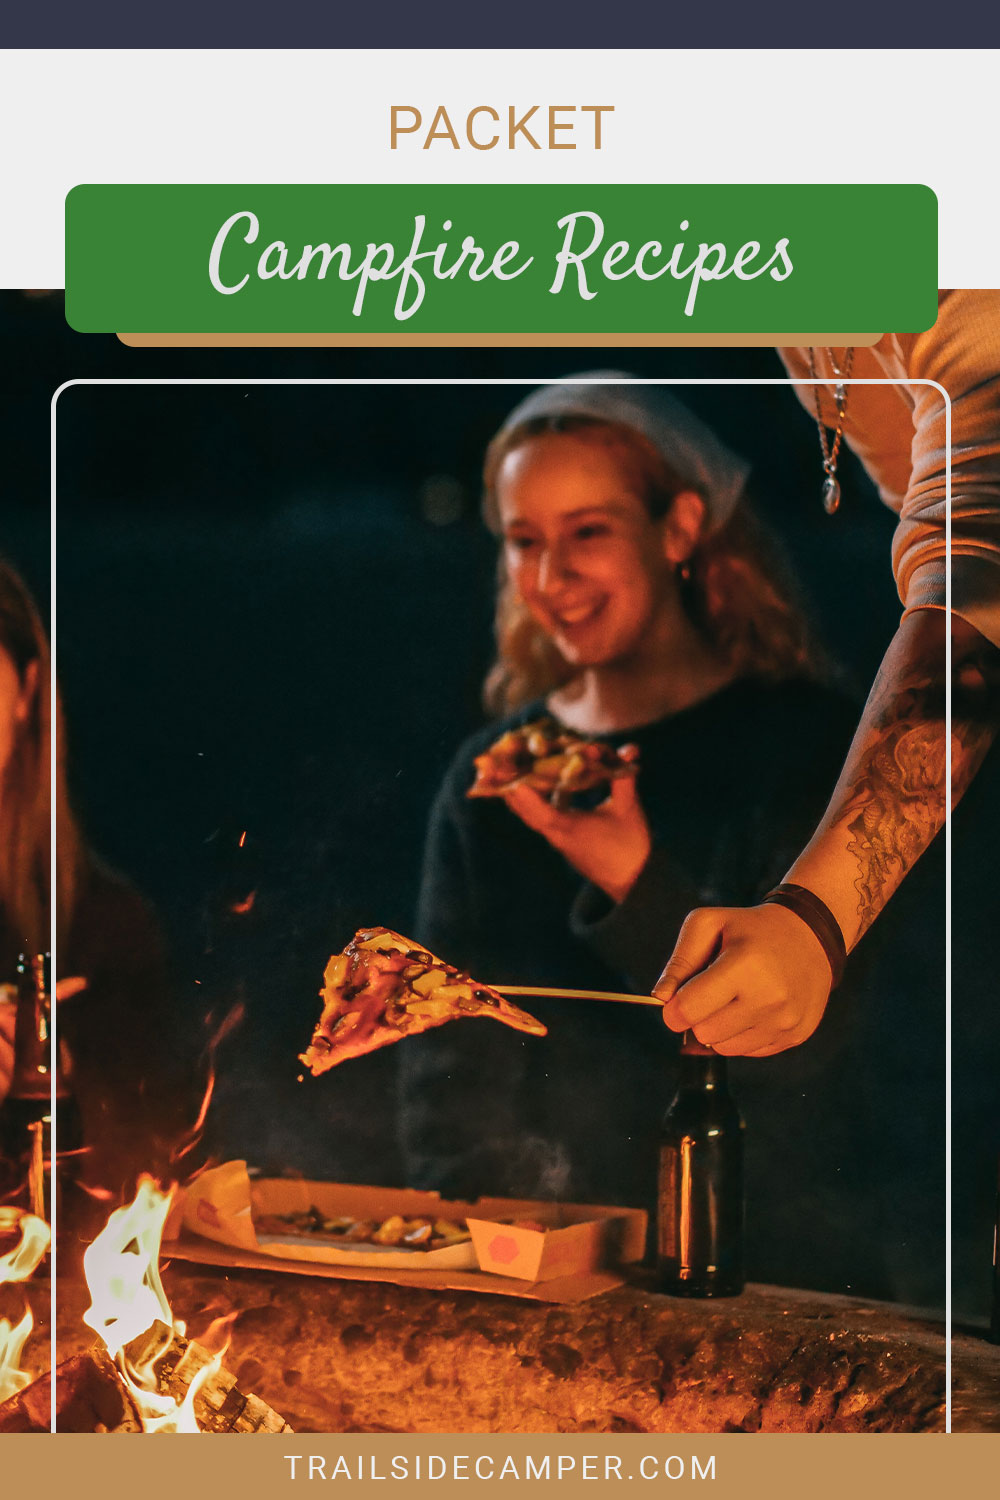 Packet Campfire Recipes